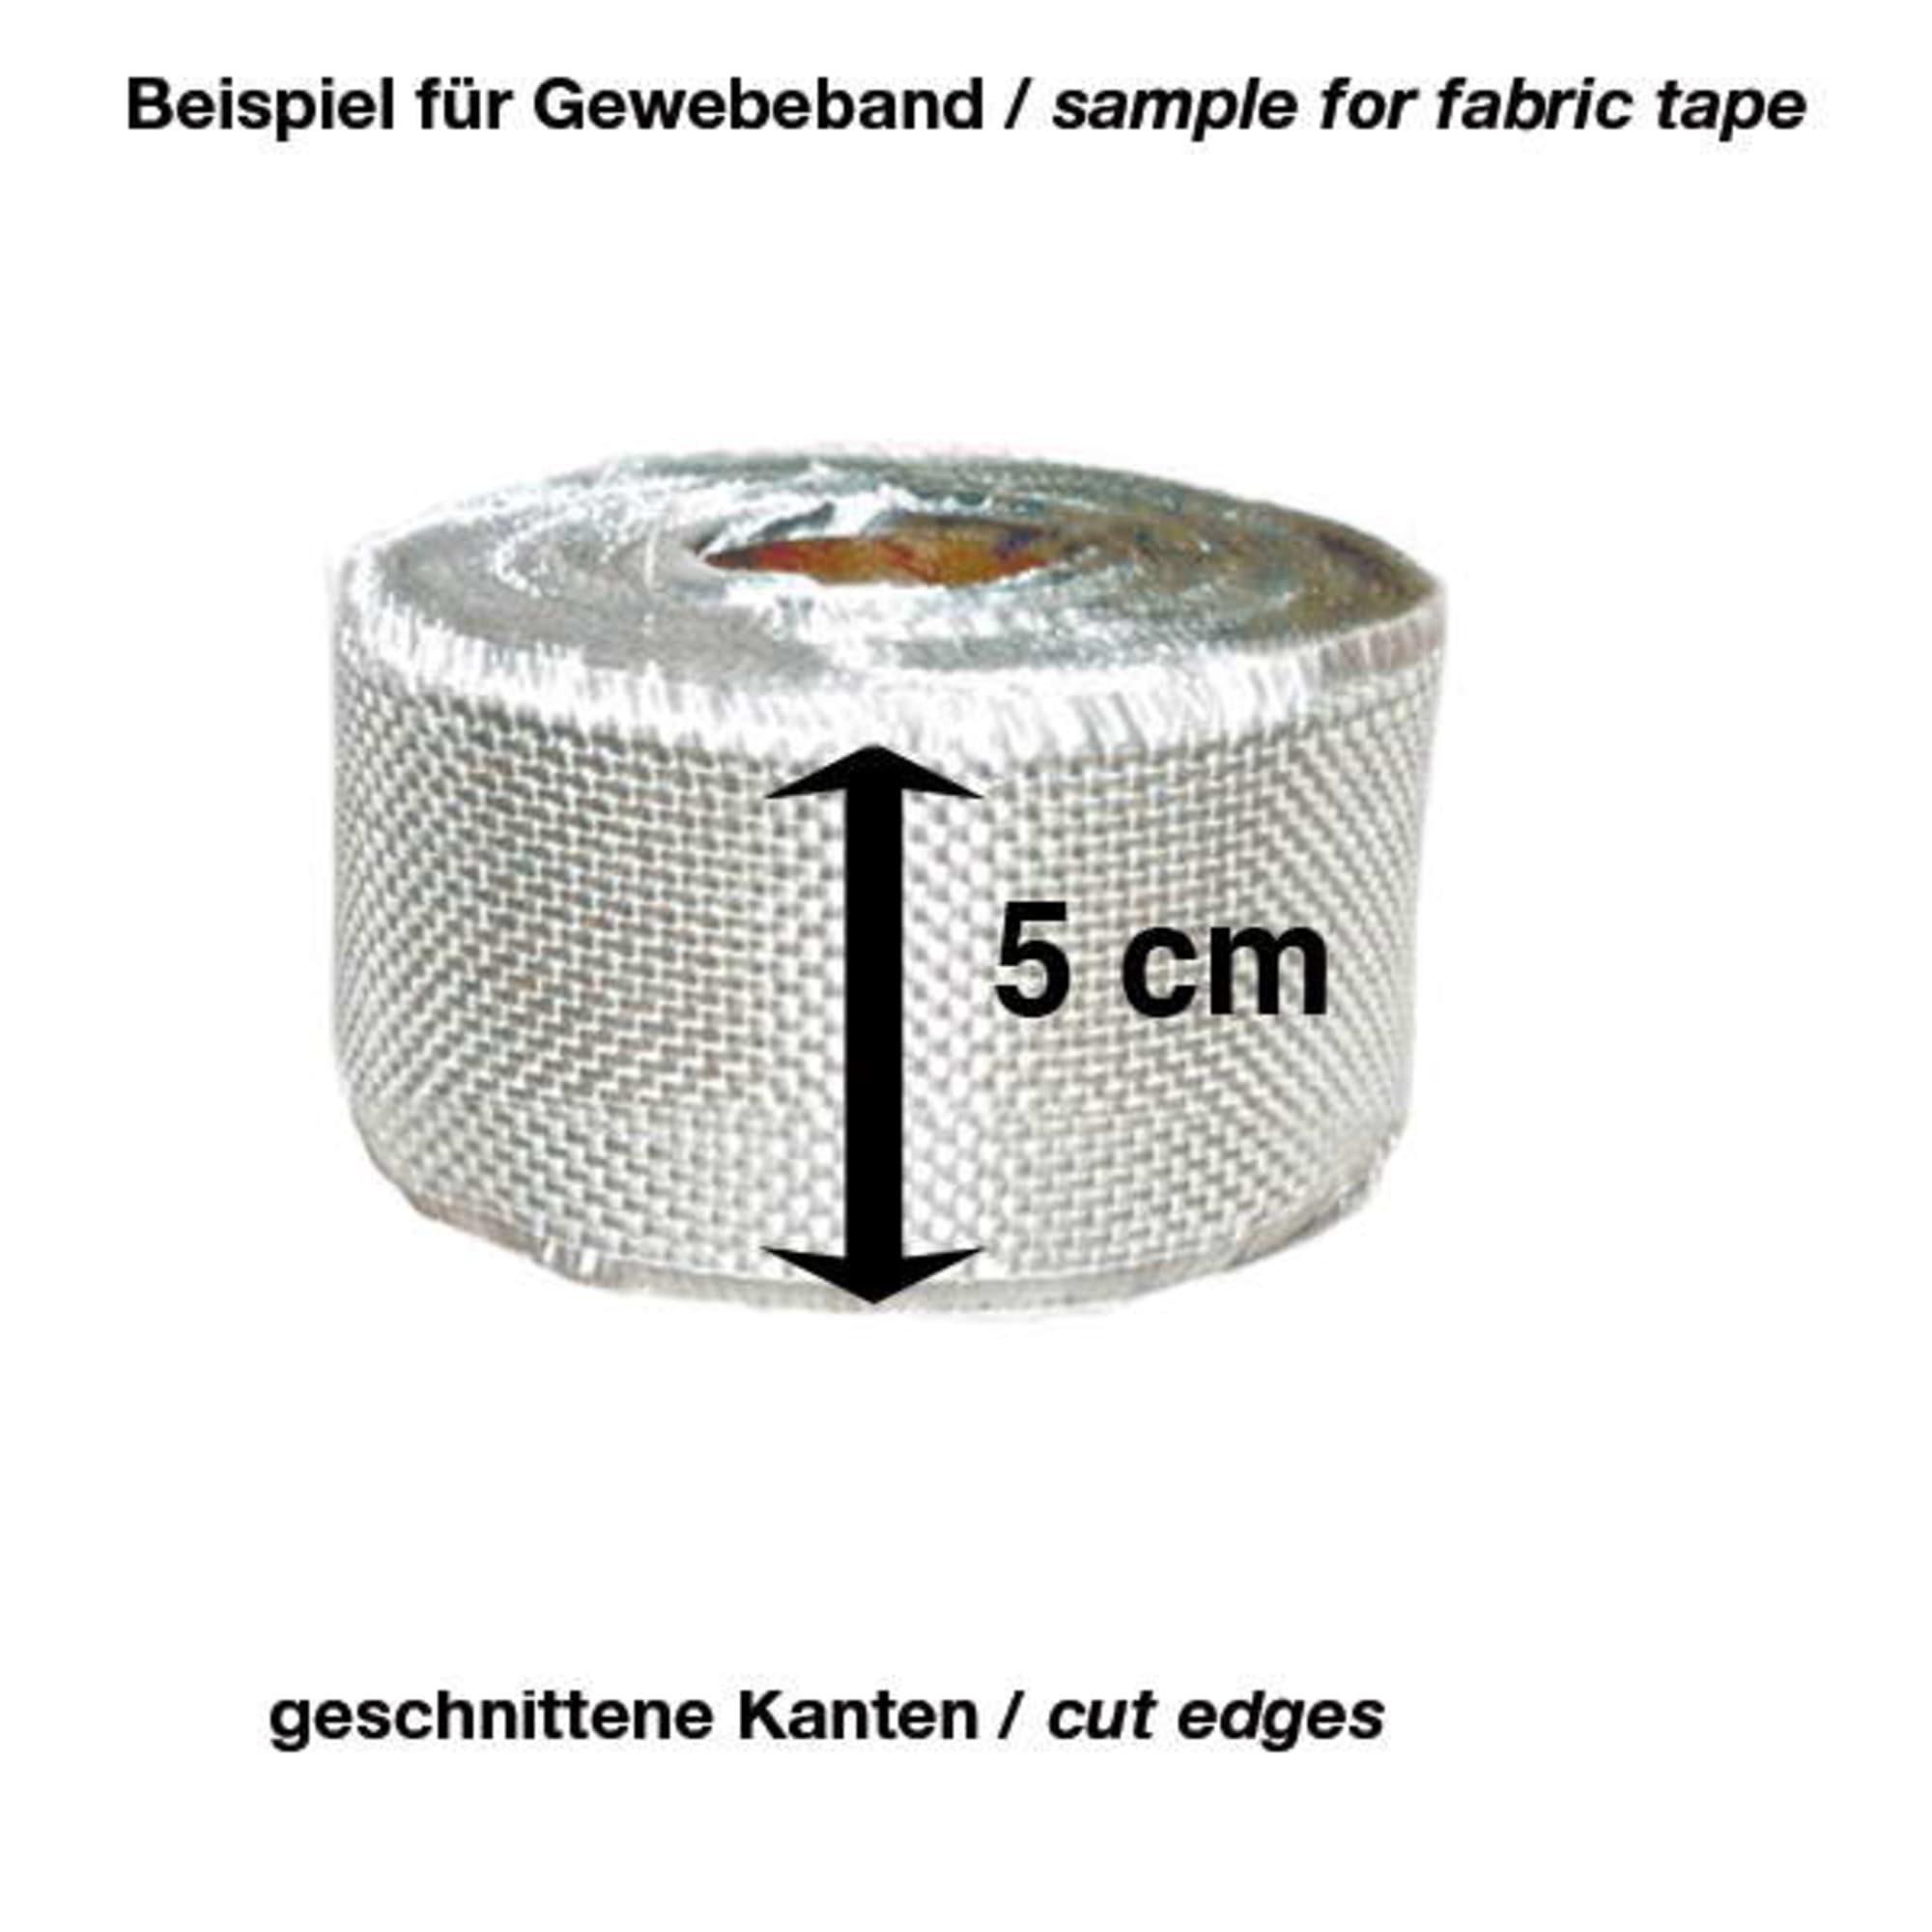 Glass fabric tape 49 g/m² (Interglas 02037, finish FE 600/800, plain weave) 5 cm, image 3